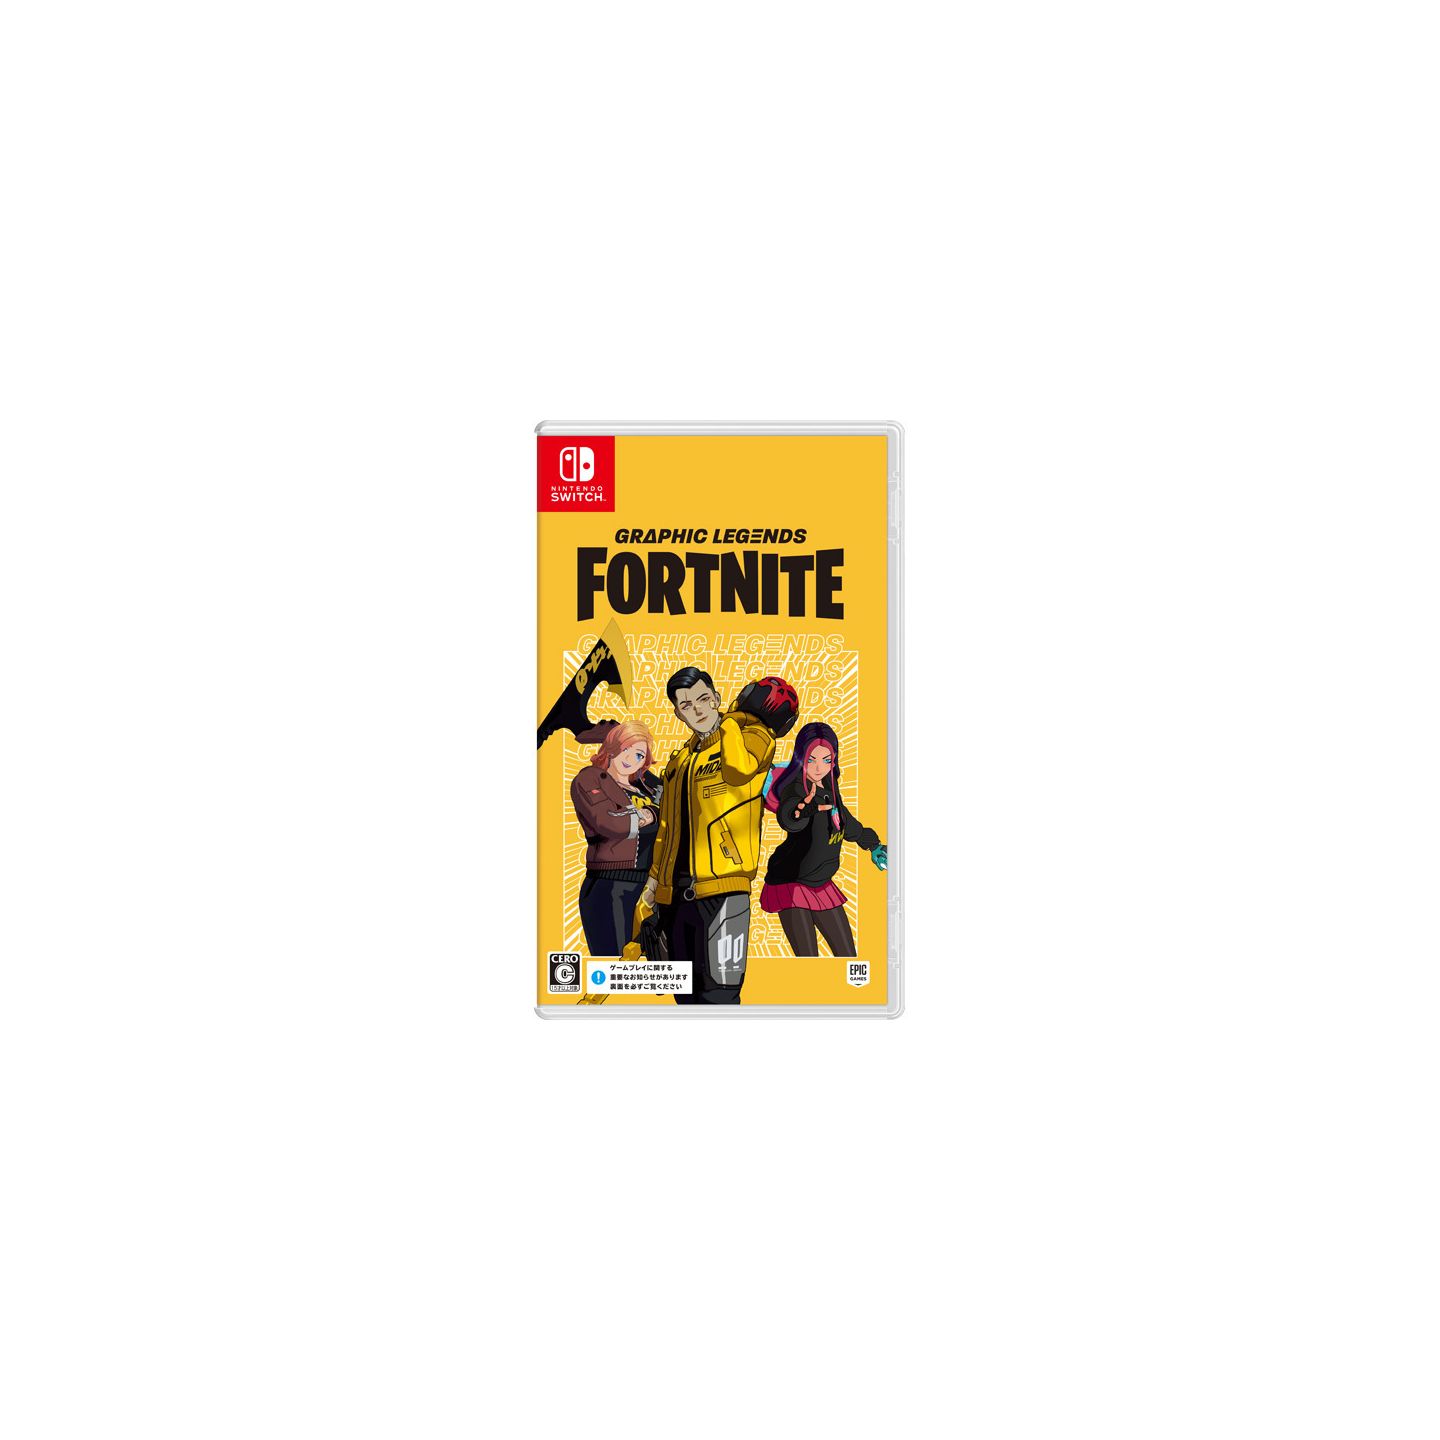 Epic Games Publishing Fortnite Minty Legends Pack (Nintendo Switch